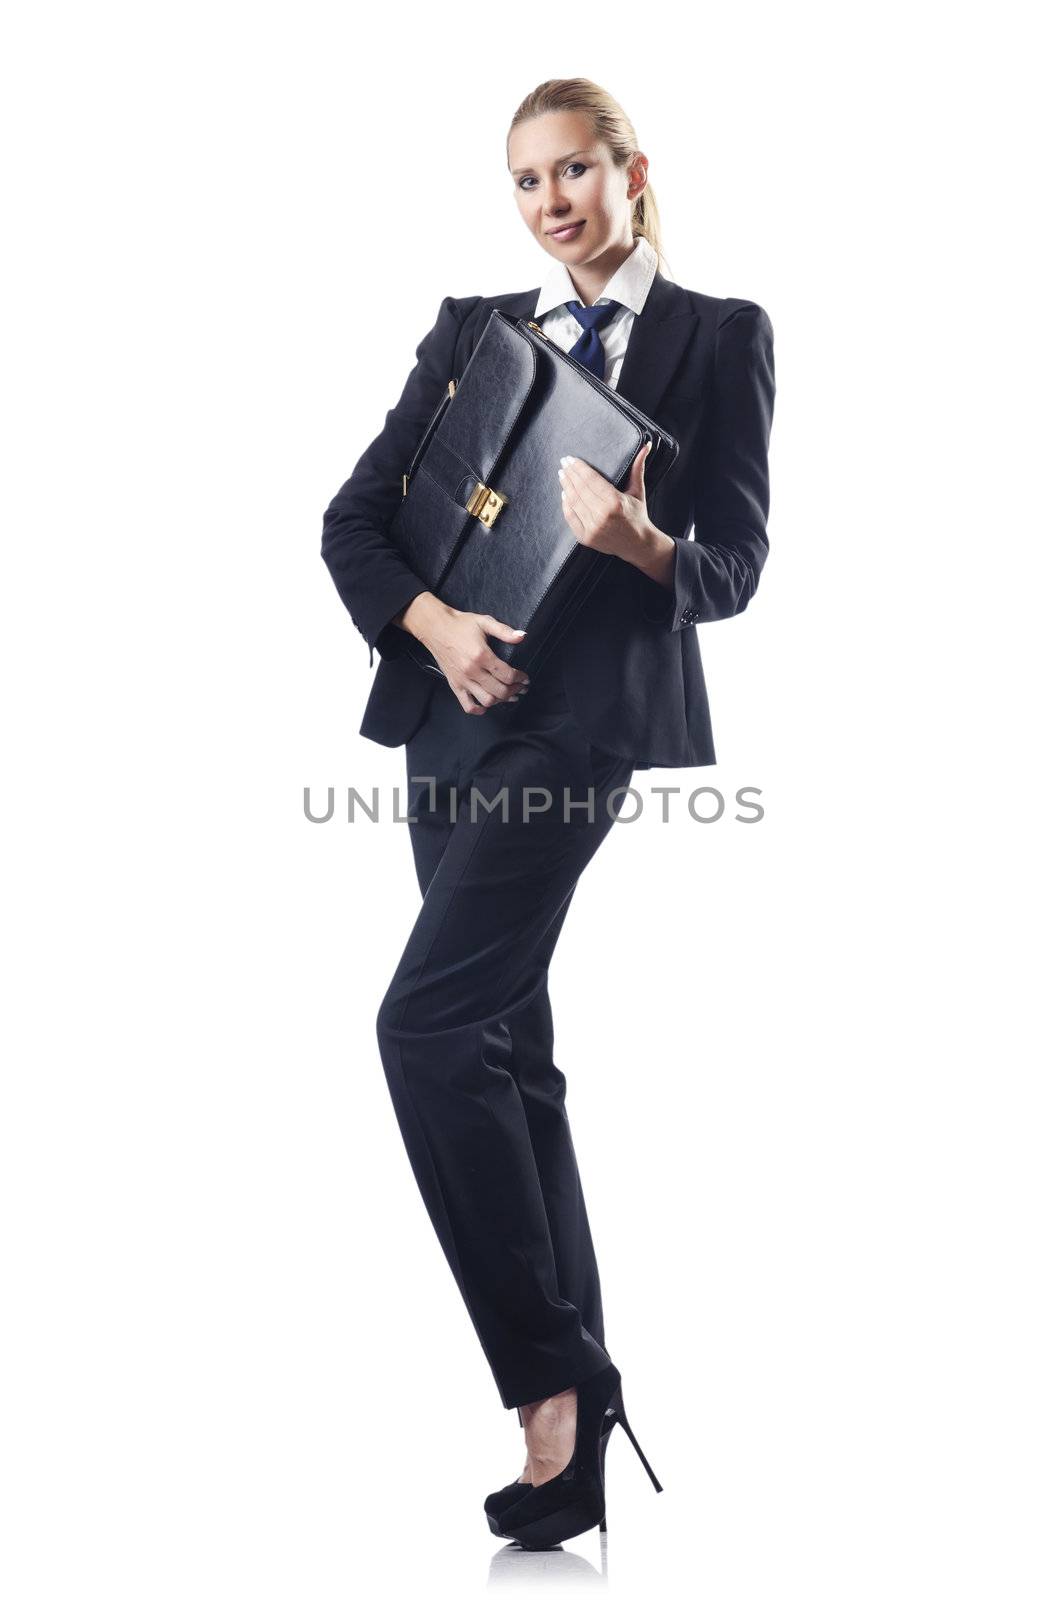 Businesswoman with briefcase on white by Elnur